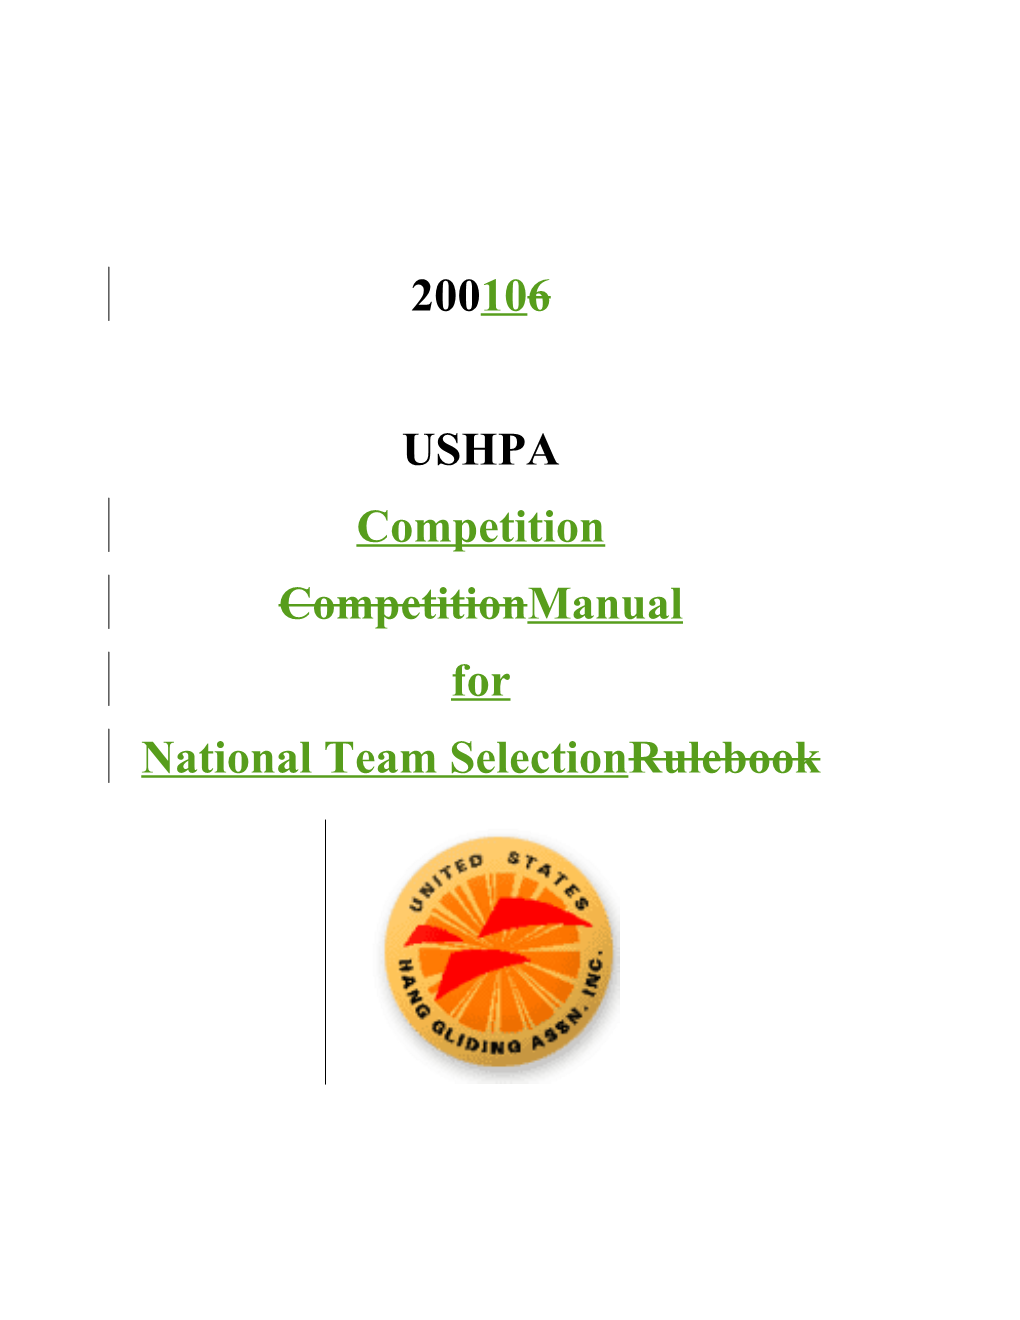 *Provisional* USHGA 2001 Competition Rulebook